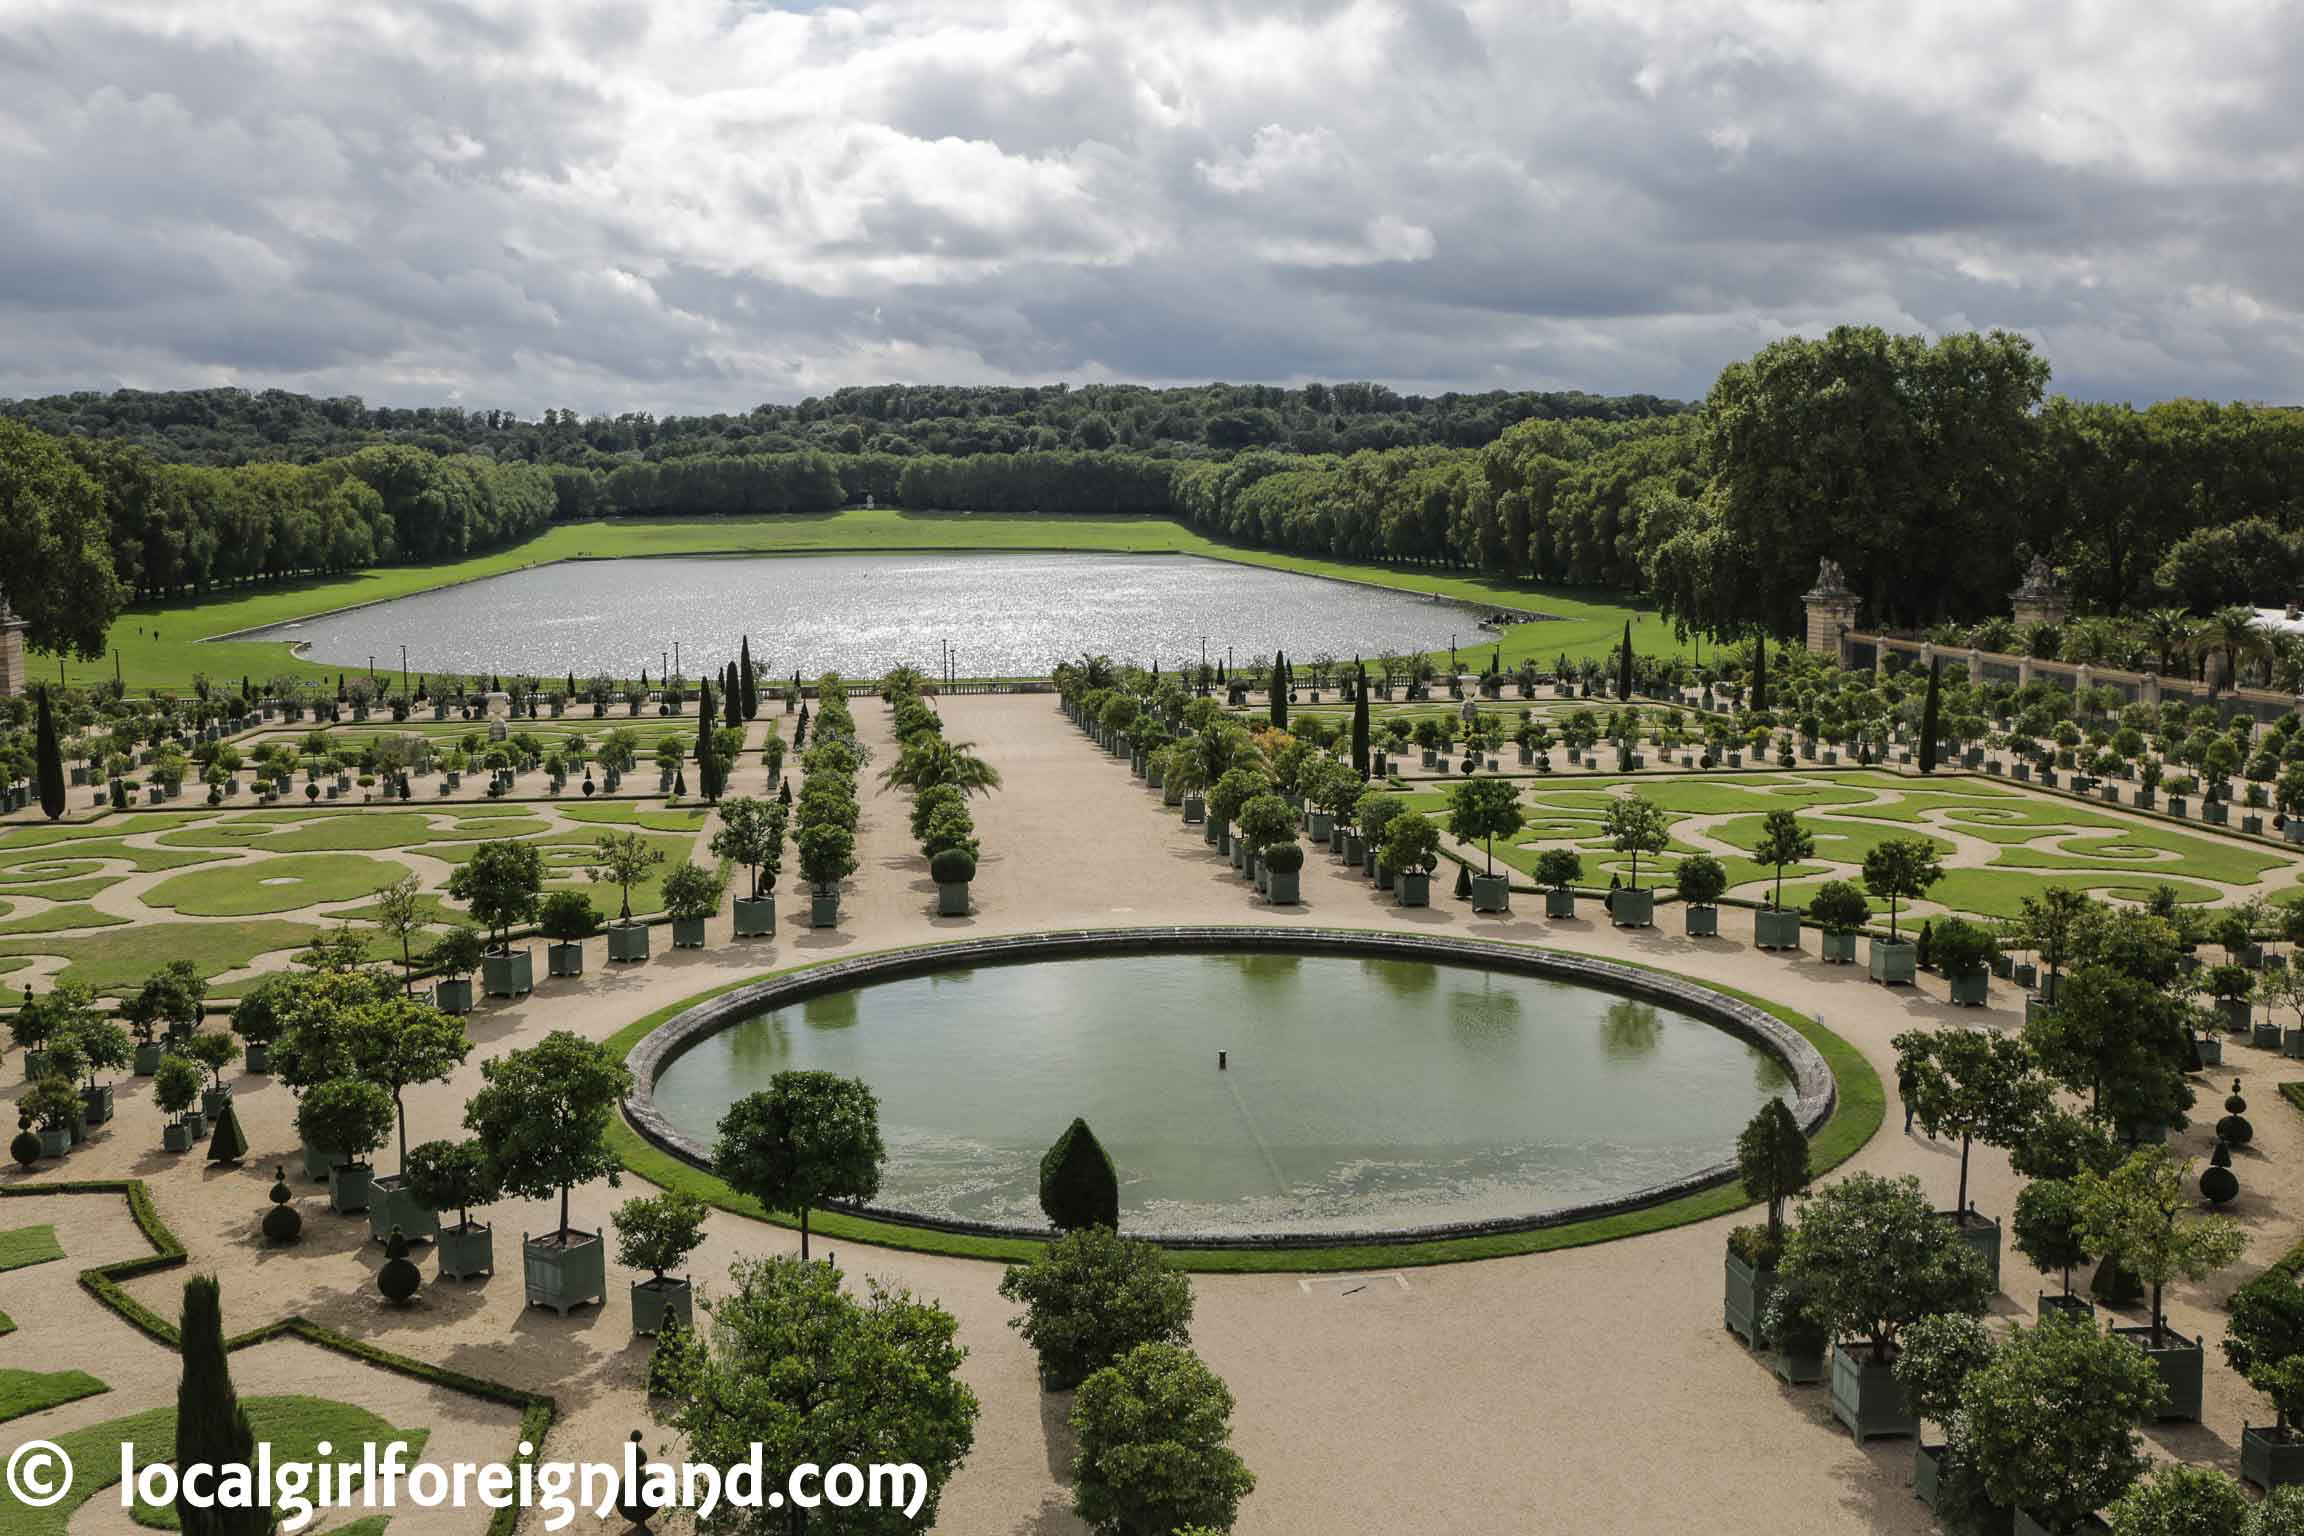 Palace-of-Versailles-garden-8361